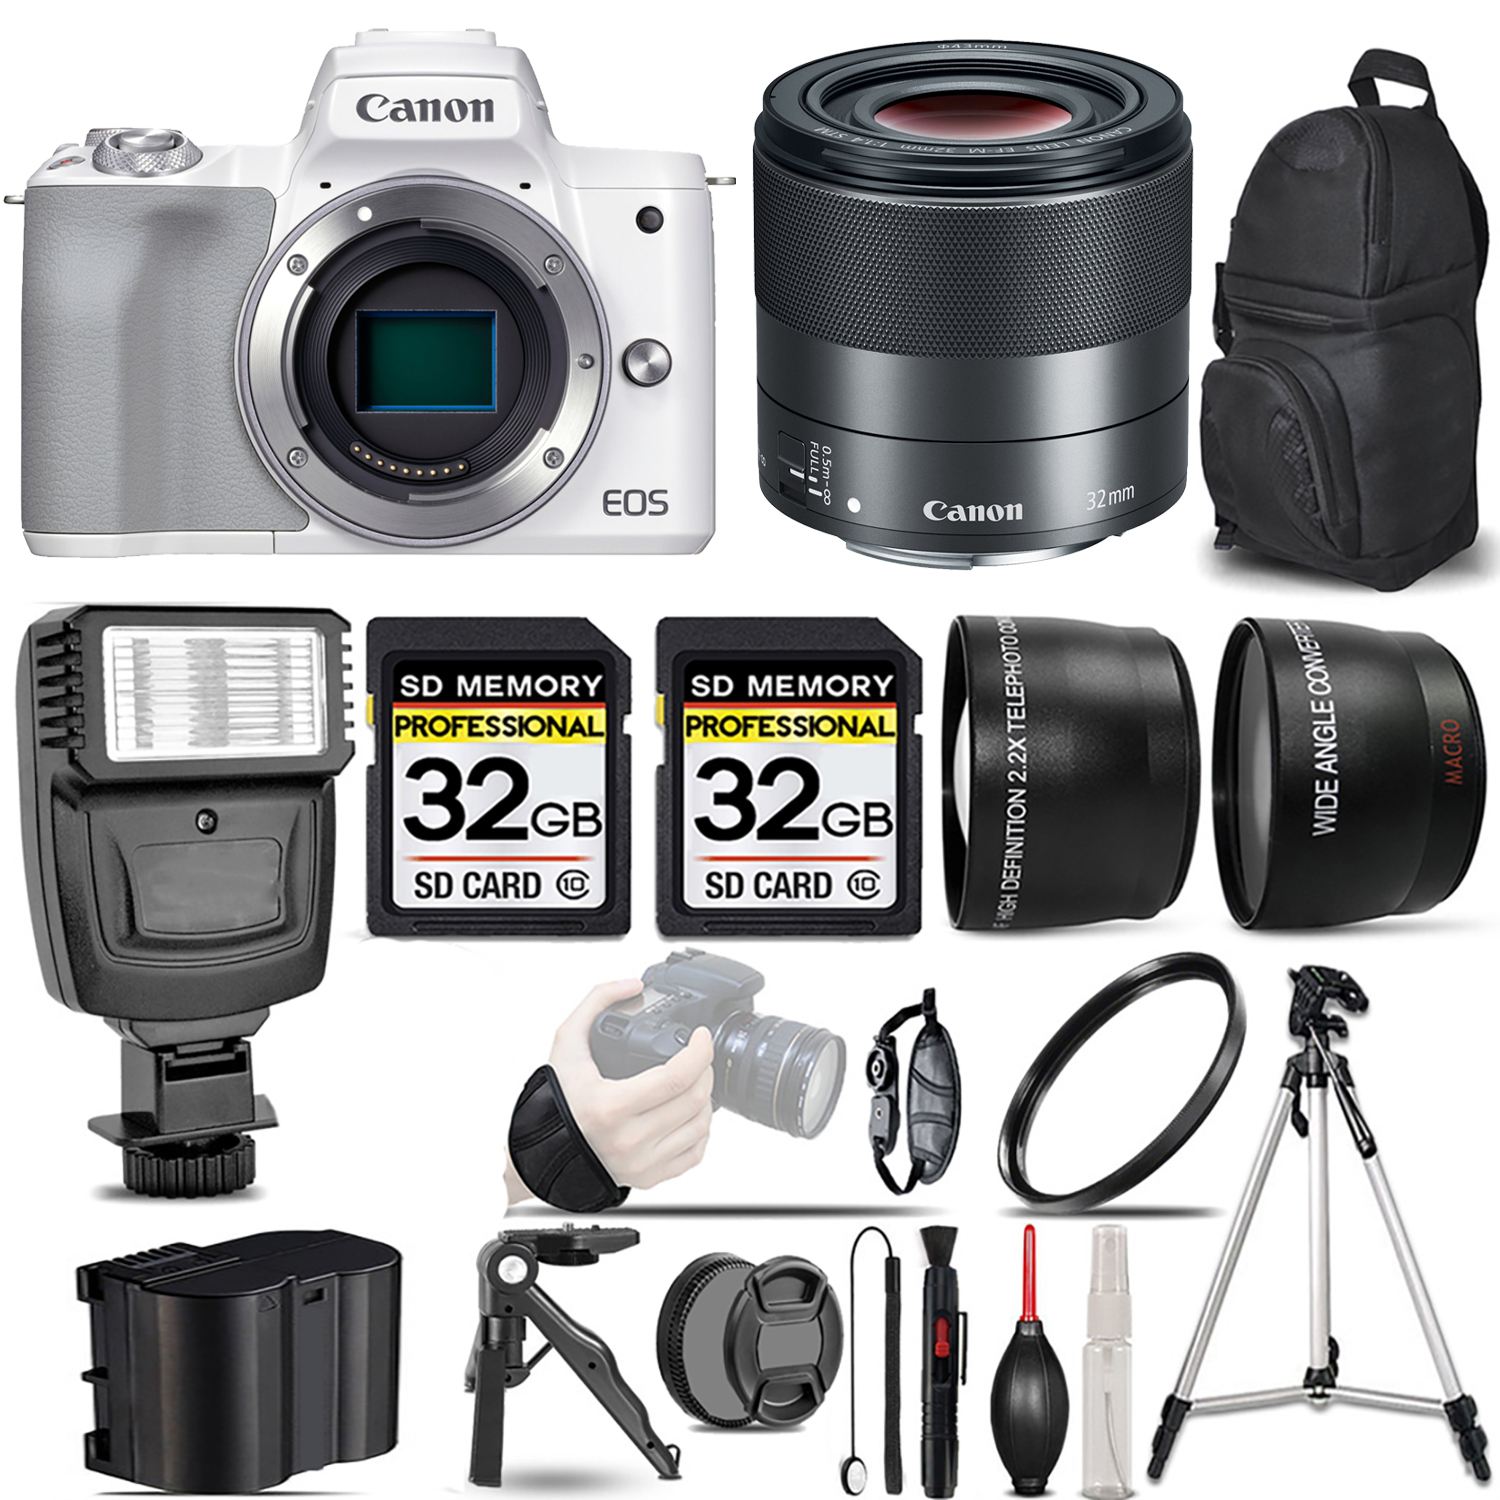 EOS M50 Mark II Camera (White) + 32mm f/1.4 STM Lens + Flash + 64GB - Kit *FREE SHIPPING*